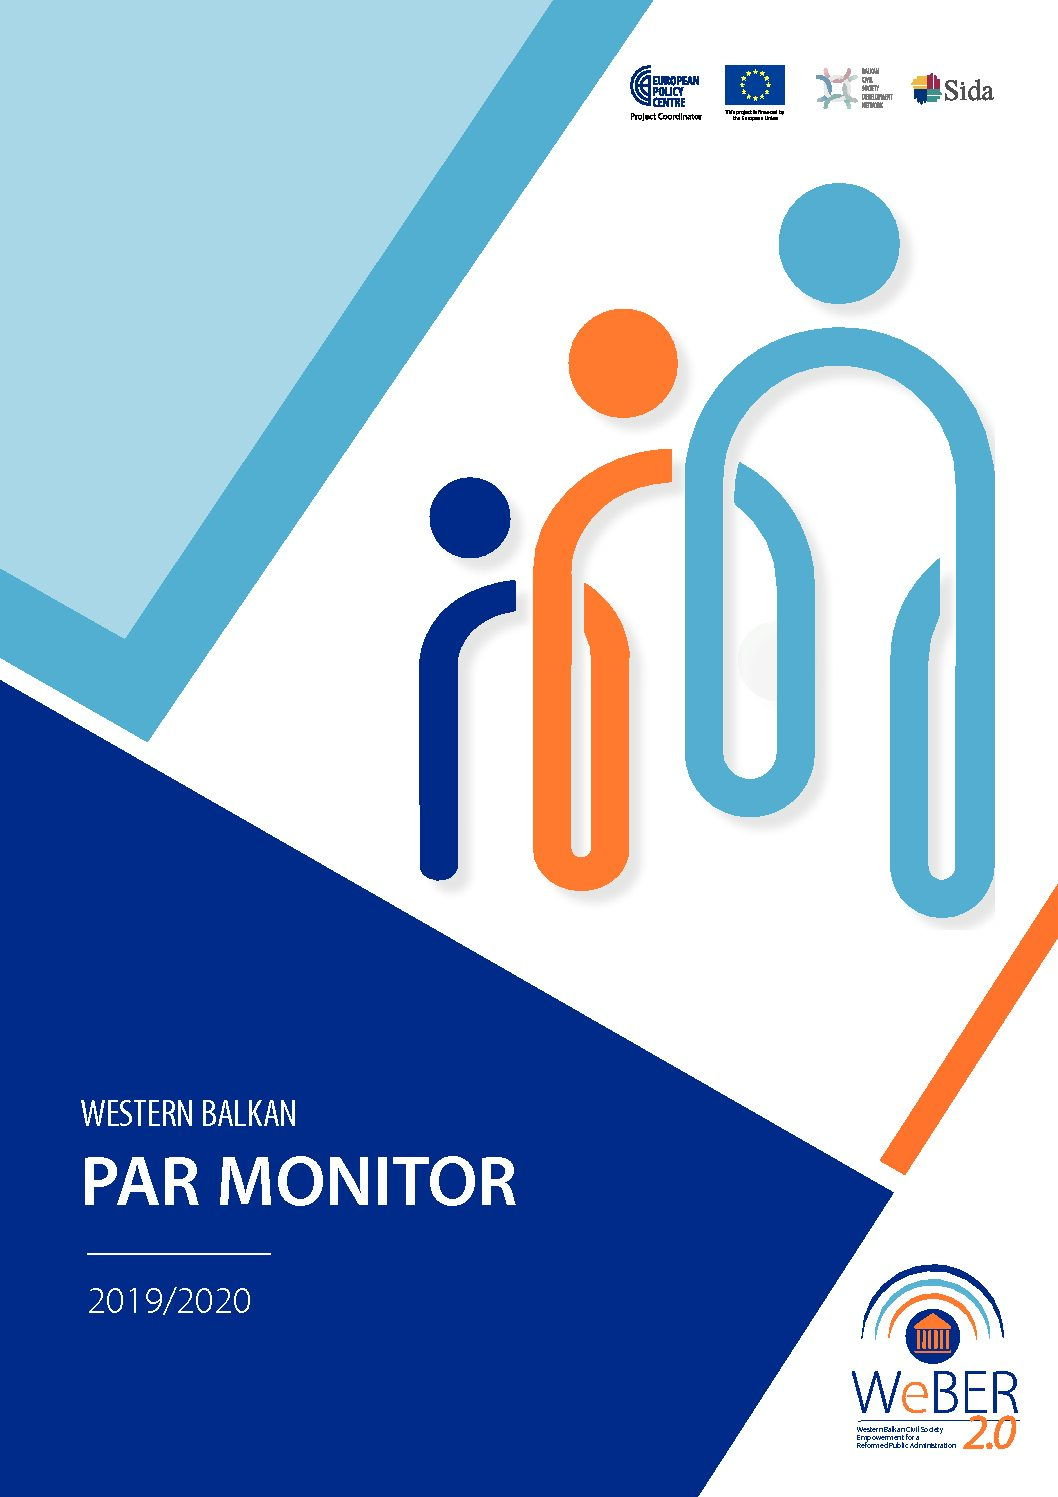 Western Balkan PAR Monitor 2019/2020